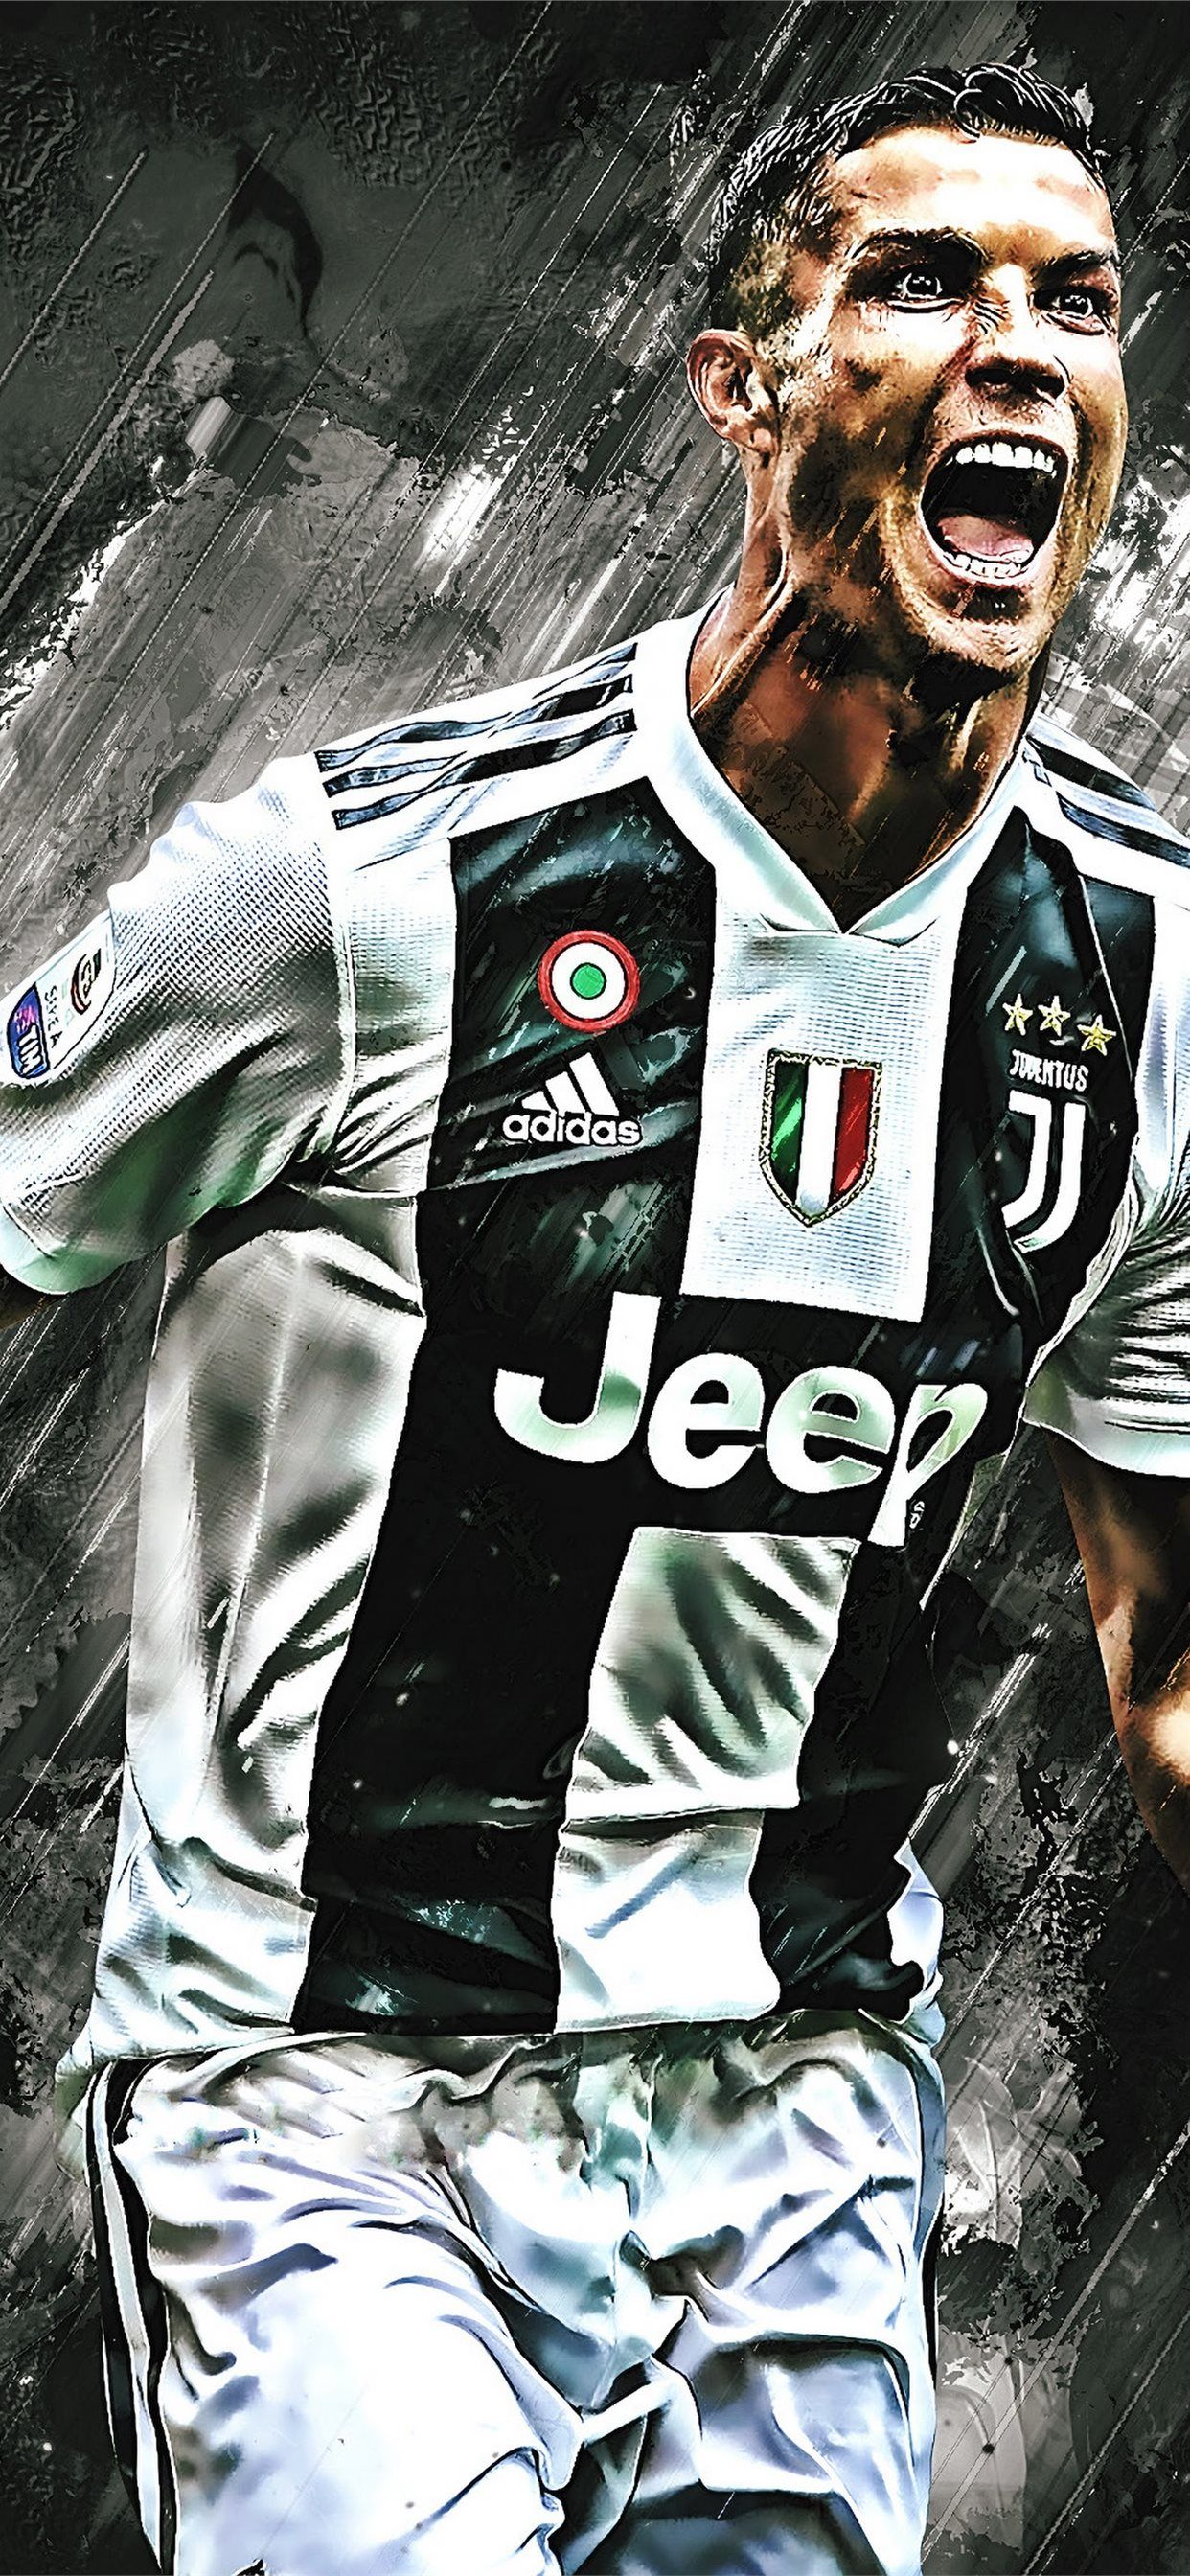 Cristiano Ronaldo Football Player 4K iPhone X Wallpaper Free Download